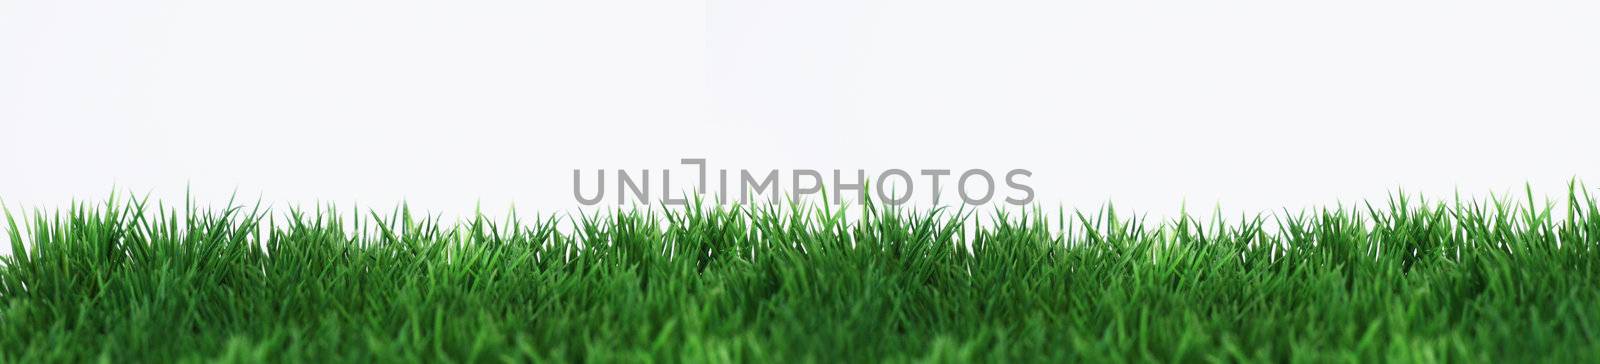 Grass Banner  by photochecker